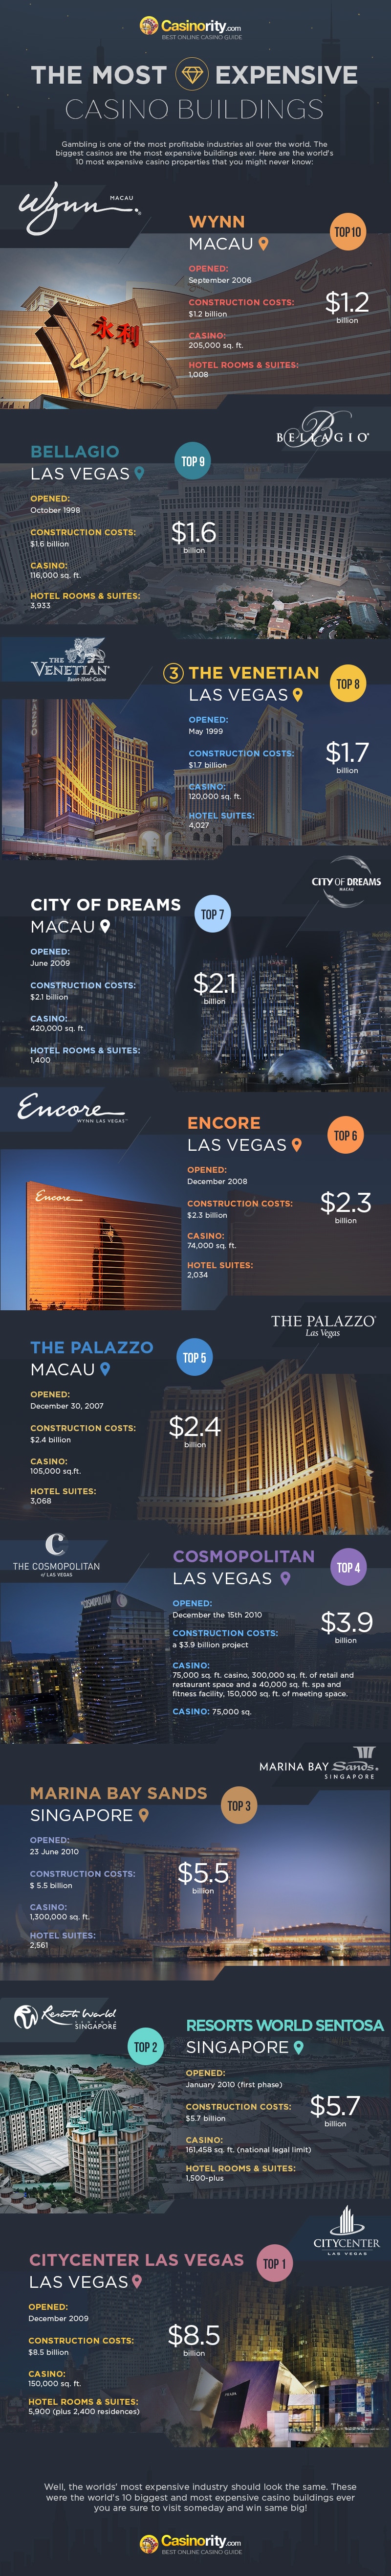 Top 10 Casino Buildings Infographic